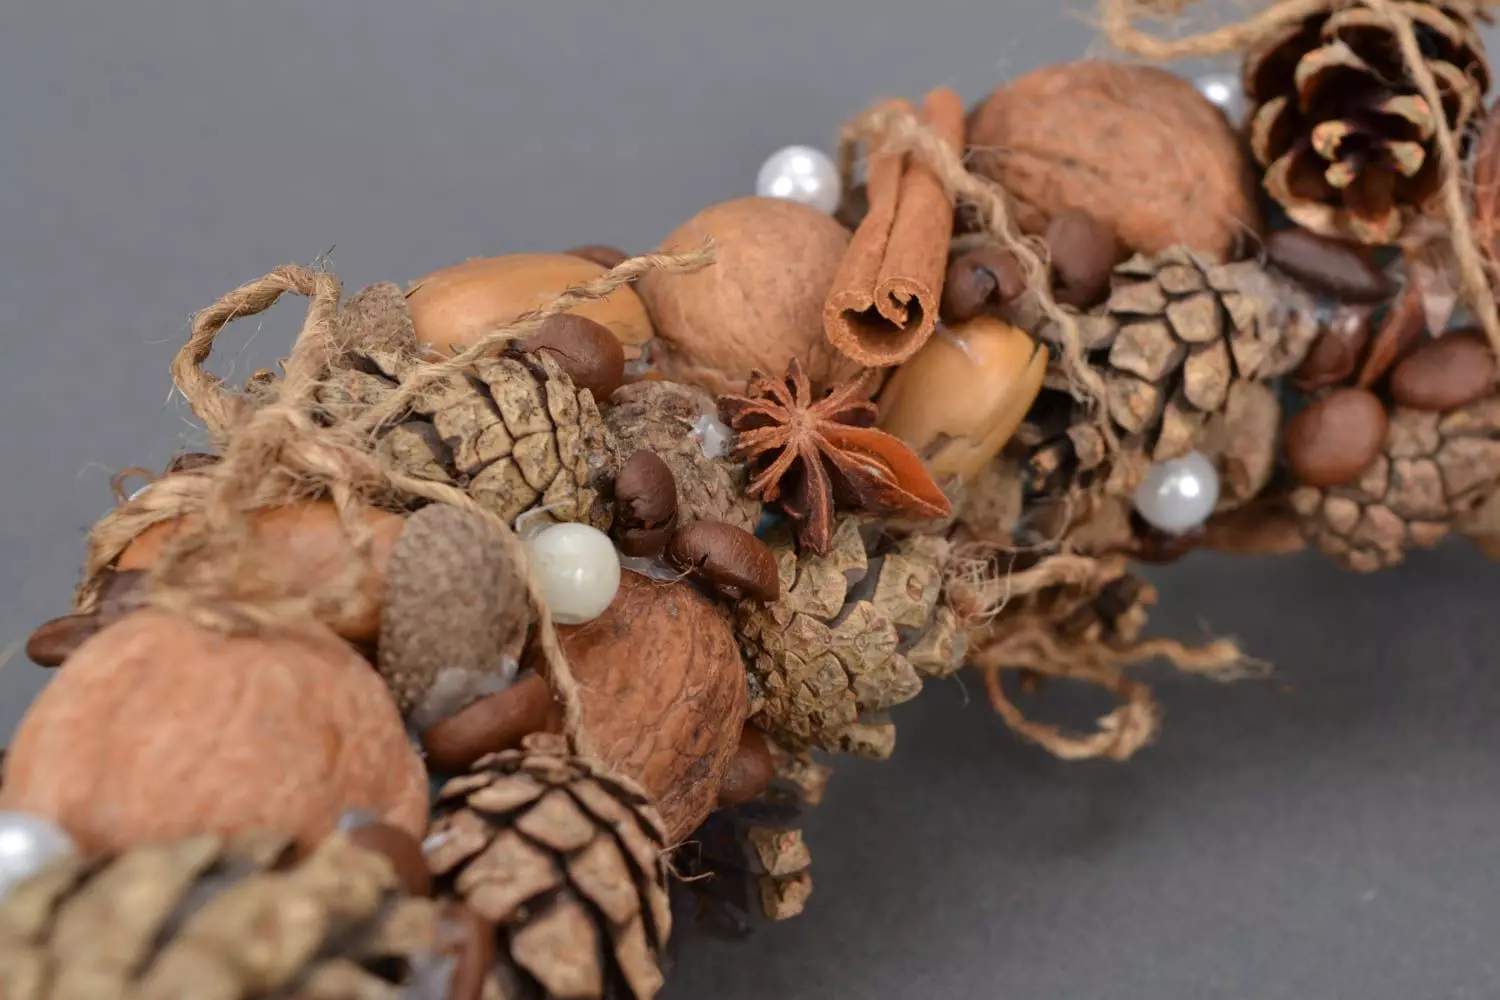 cones ଏବଂ acorns (44 ଫଟୋ) ରୁ କ୍ରାଫ୍ଟଗୁଡିକ: Autumn ପତ୍ରମାନ ସହିତ ଏବଂ ବିଦ୍ୟାଳୟ କୁ ନିଜ ହାତ chestnuts ସହିତ ଏବଂ cones ଏବଂ acorns ବାଳକମାନଙ୍କୁ, ଅନ୍ୟ କ୍ରାଫ୍ଟଗୁଡିକ ପାଇଁ kindergarten ରେ କ୍ରାଫ୍ଟଗୁଡିକ 26775_16